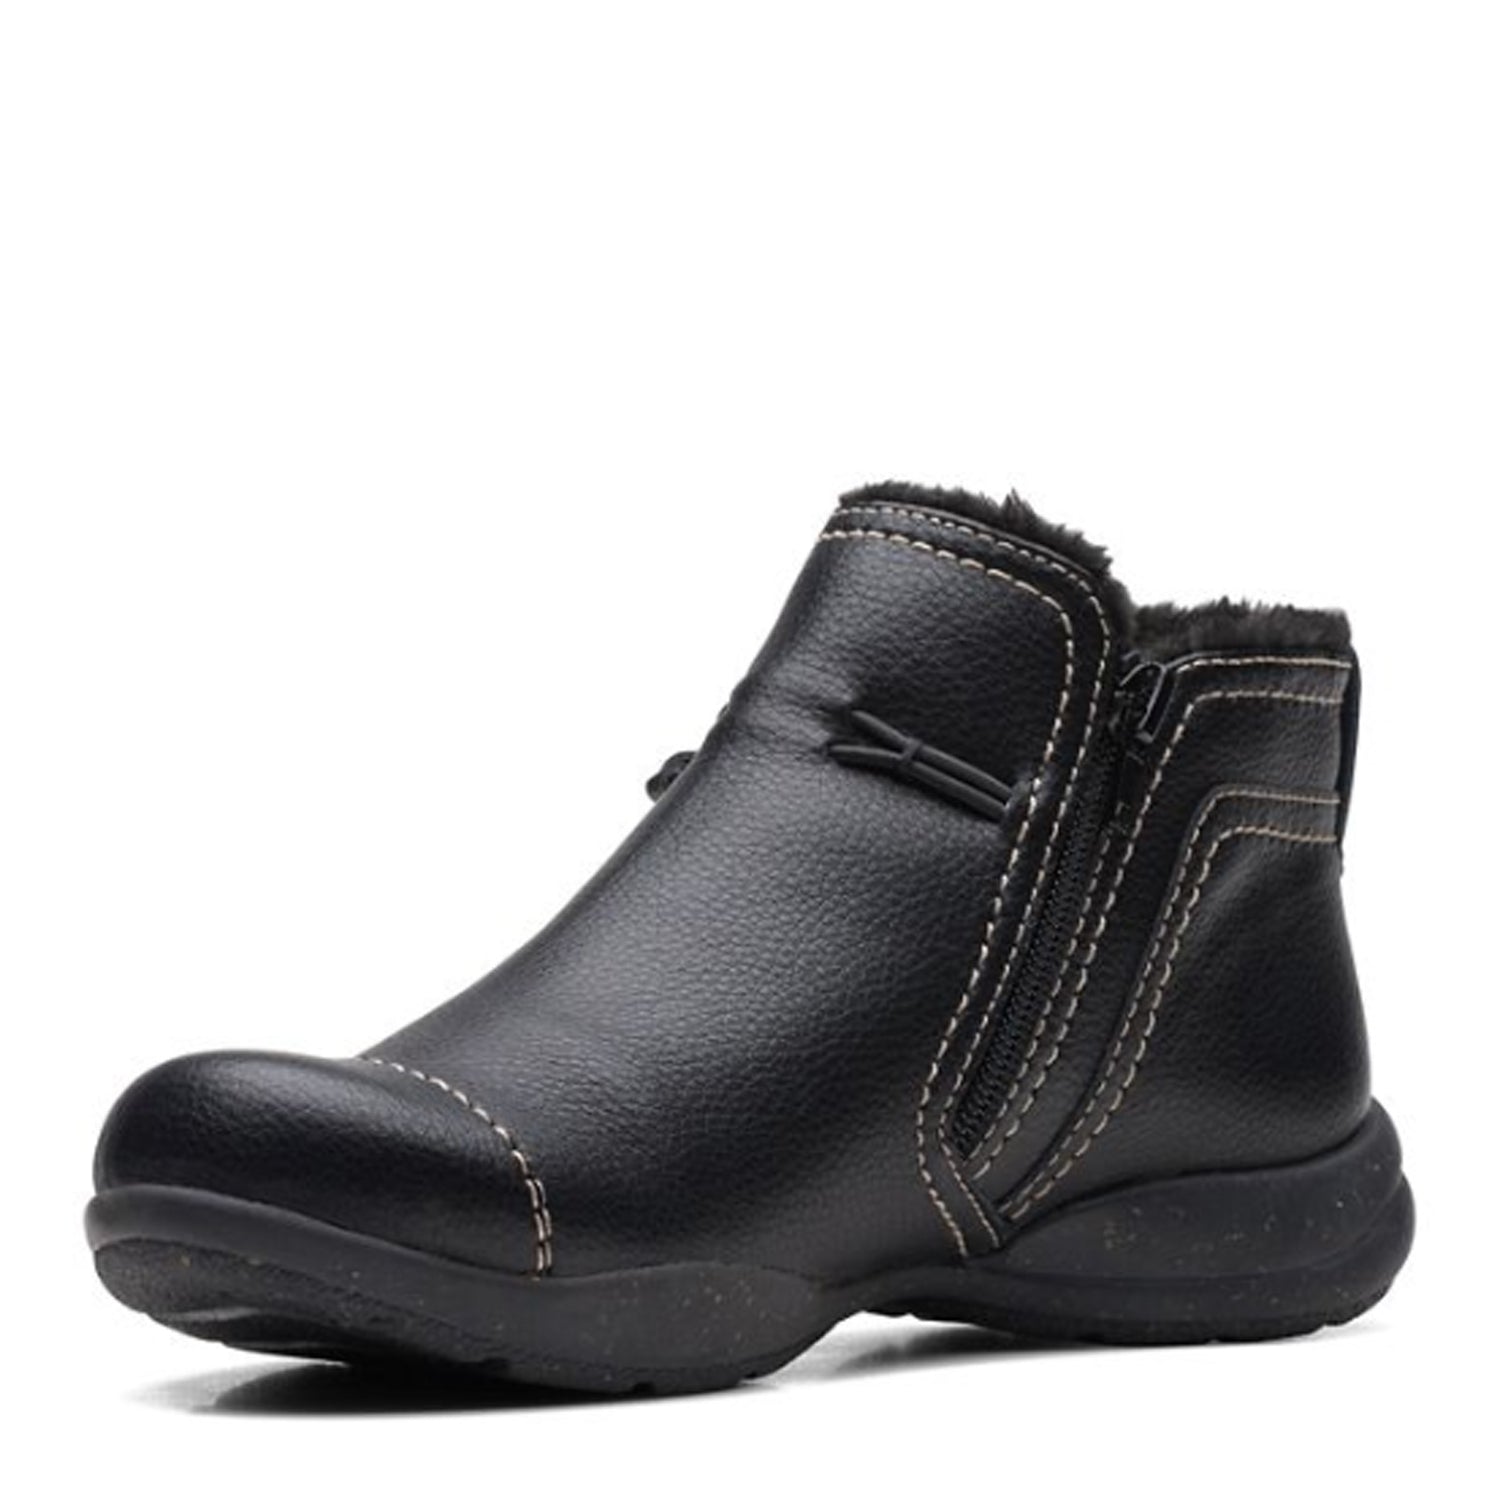 Peltz Shoes  Women's Clarks Roseville Aster Bootie BLACK LEATHER 26168446